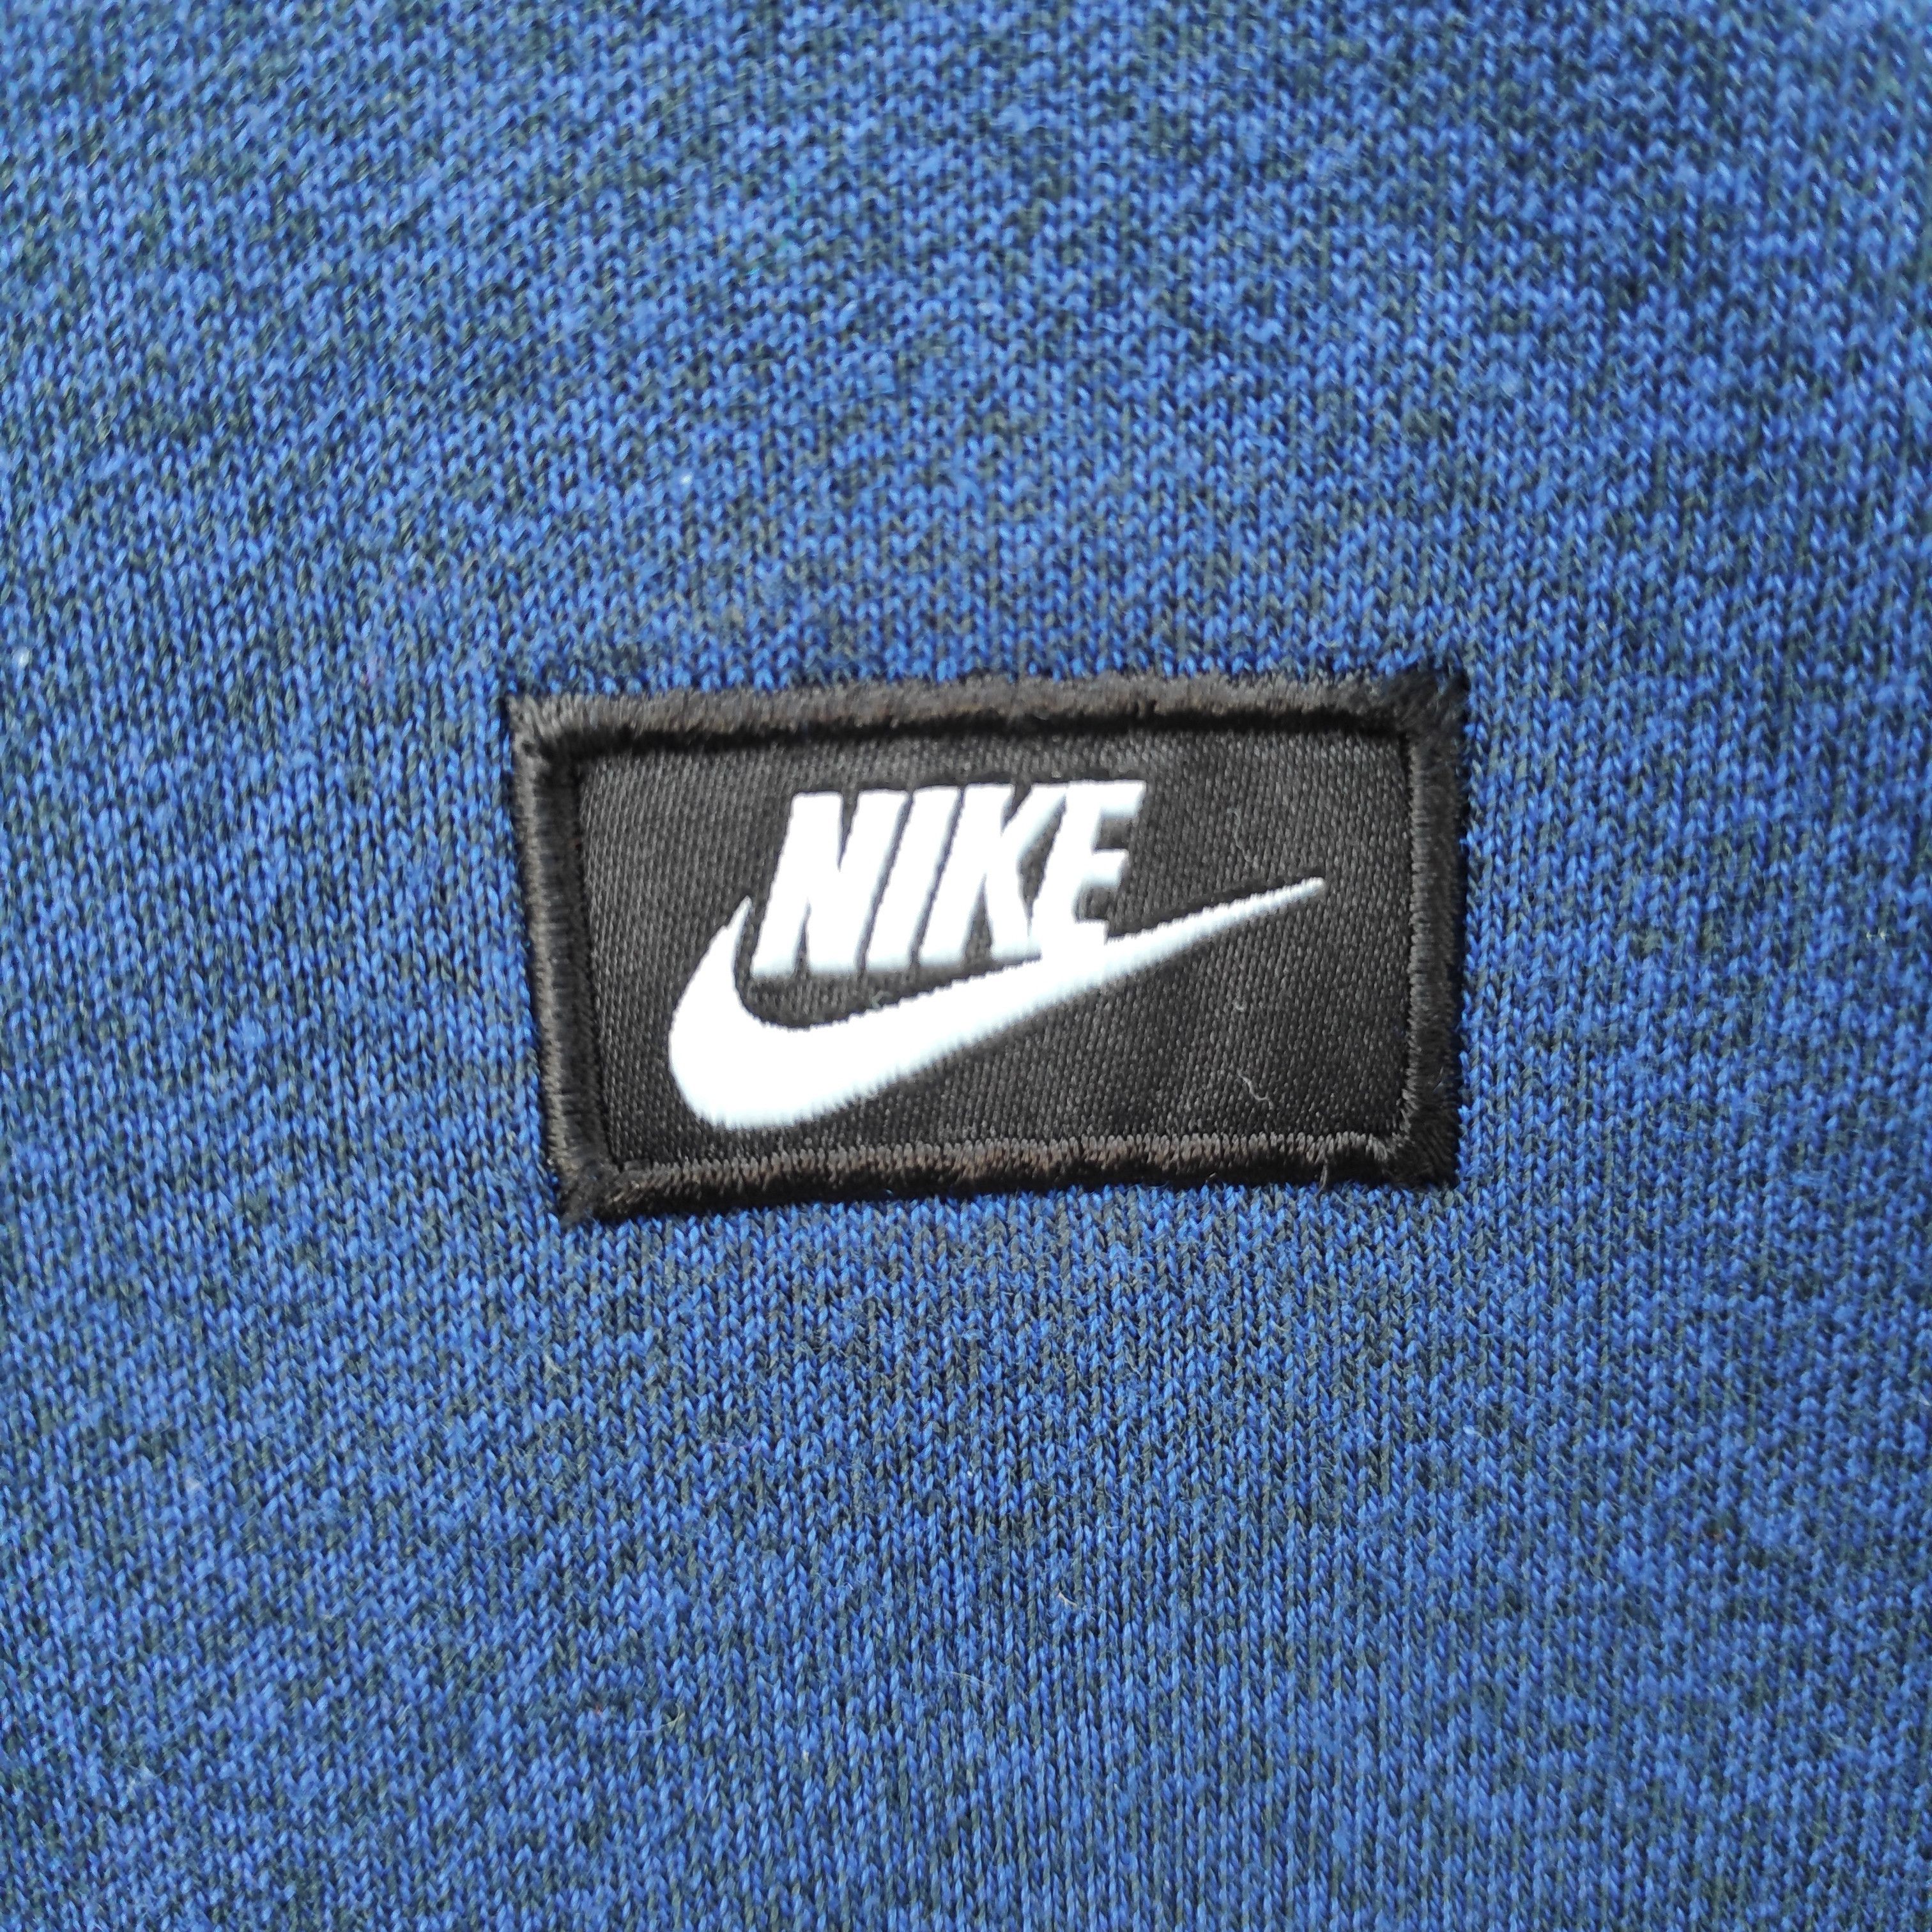 Nike NIKE SWEATSHIRT MEDIUM BLUE PULLOVER JUMPER CREW NECK Size US M / EU 48-50 / 2 - 5 Preview